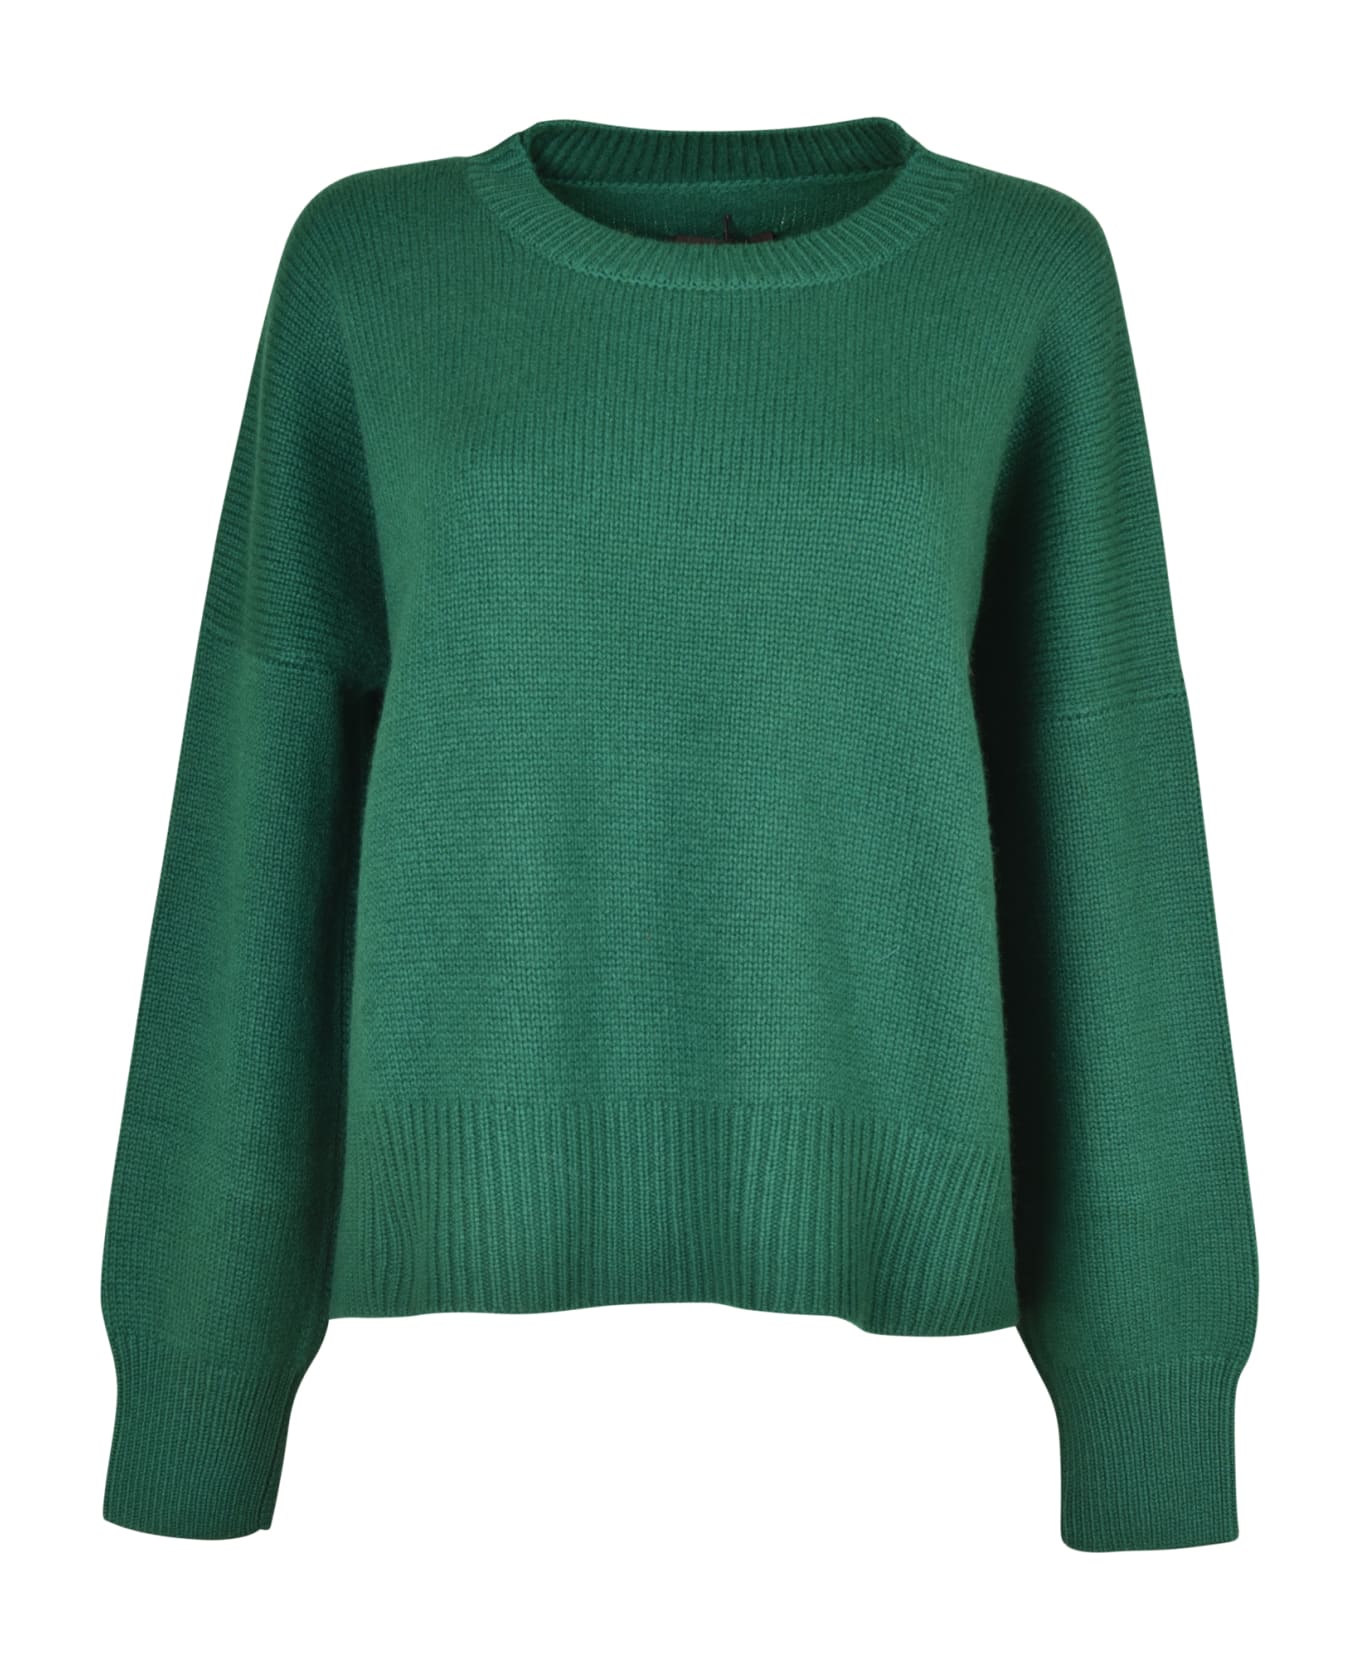 Oyuna Aila Sweater - Emerald ニットウェア